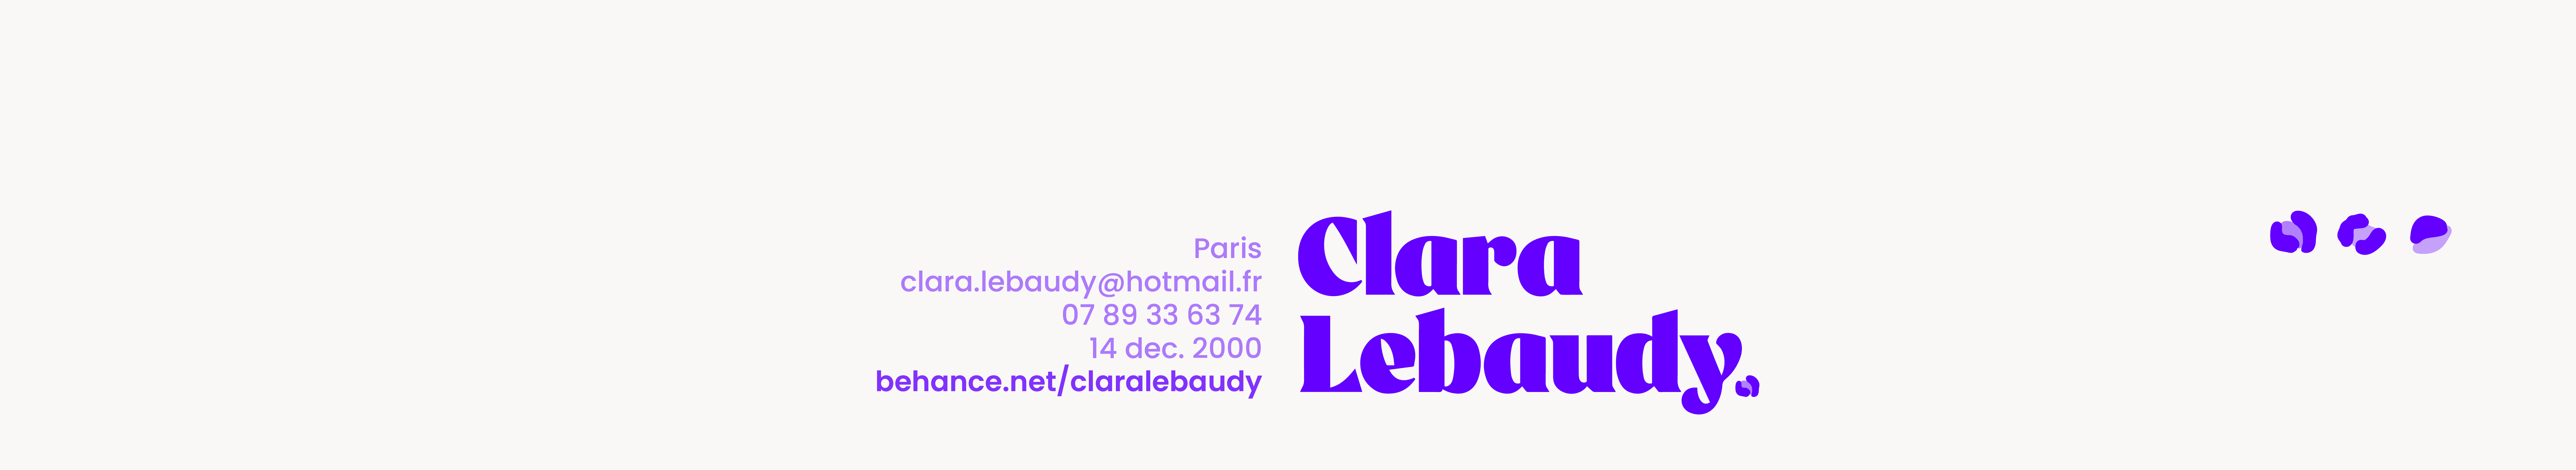 Clara LEBAUDYs profilbanner